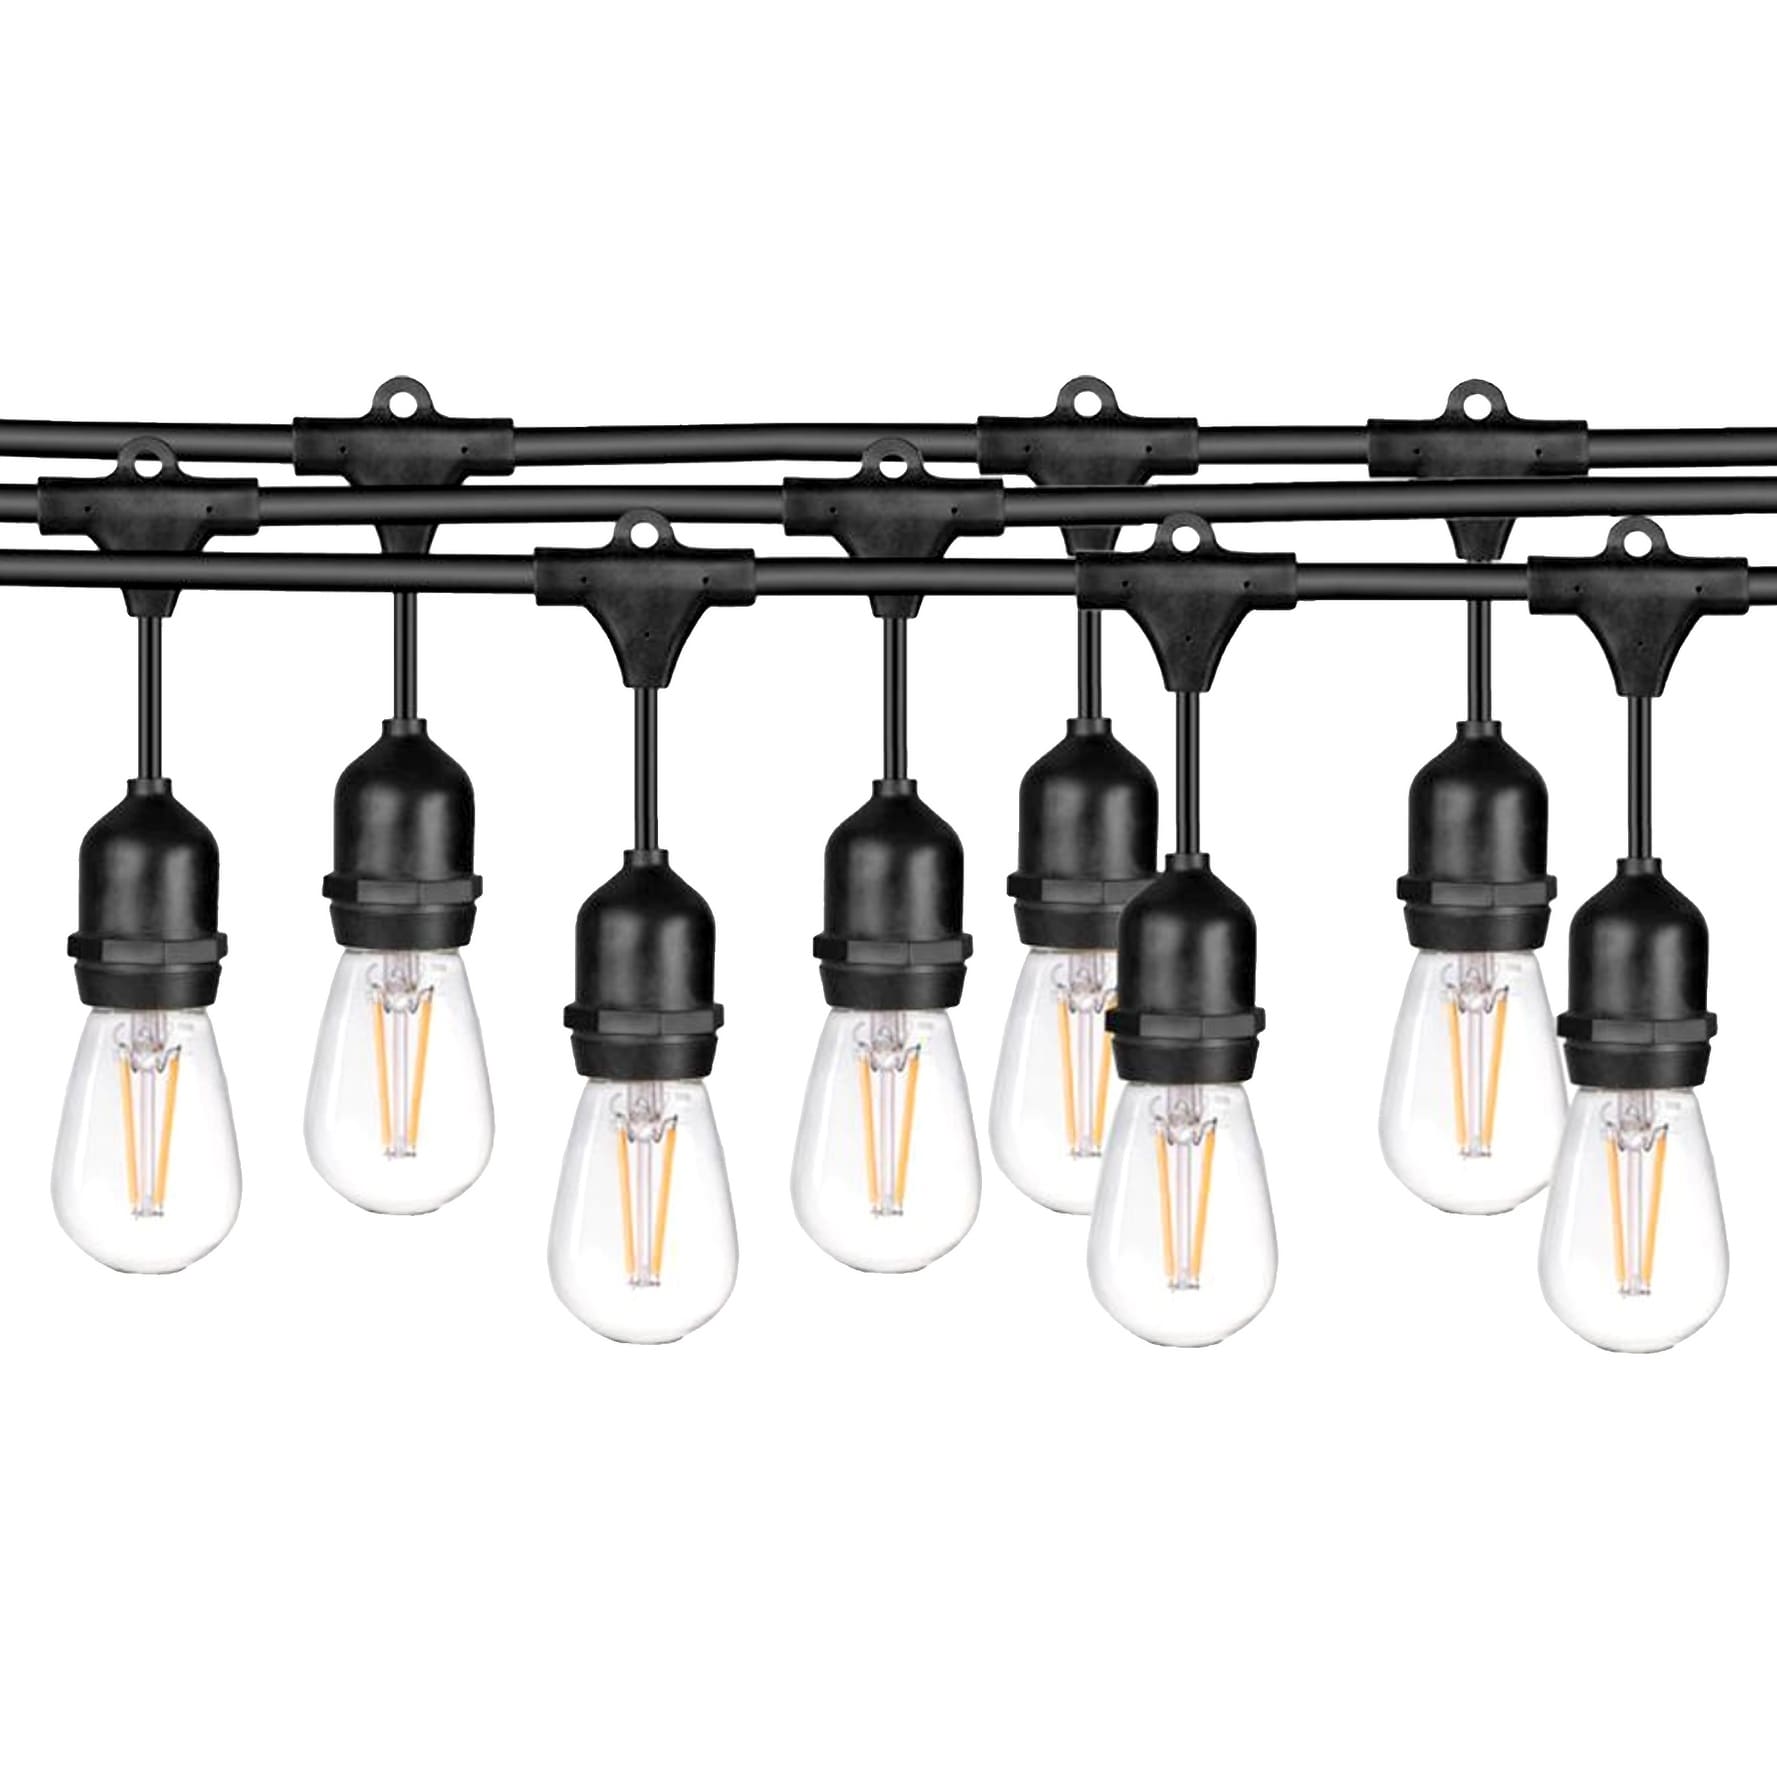 Details about   LED String Lights 15 Hanging Sockets Outdoor 48ft Weatherproof Commercial LED 